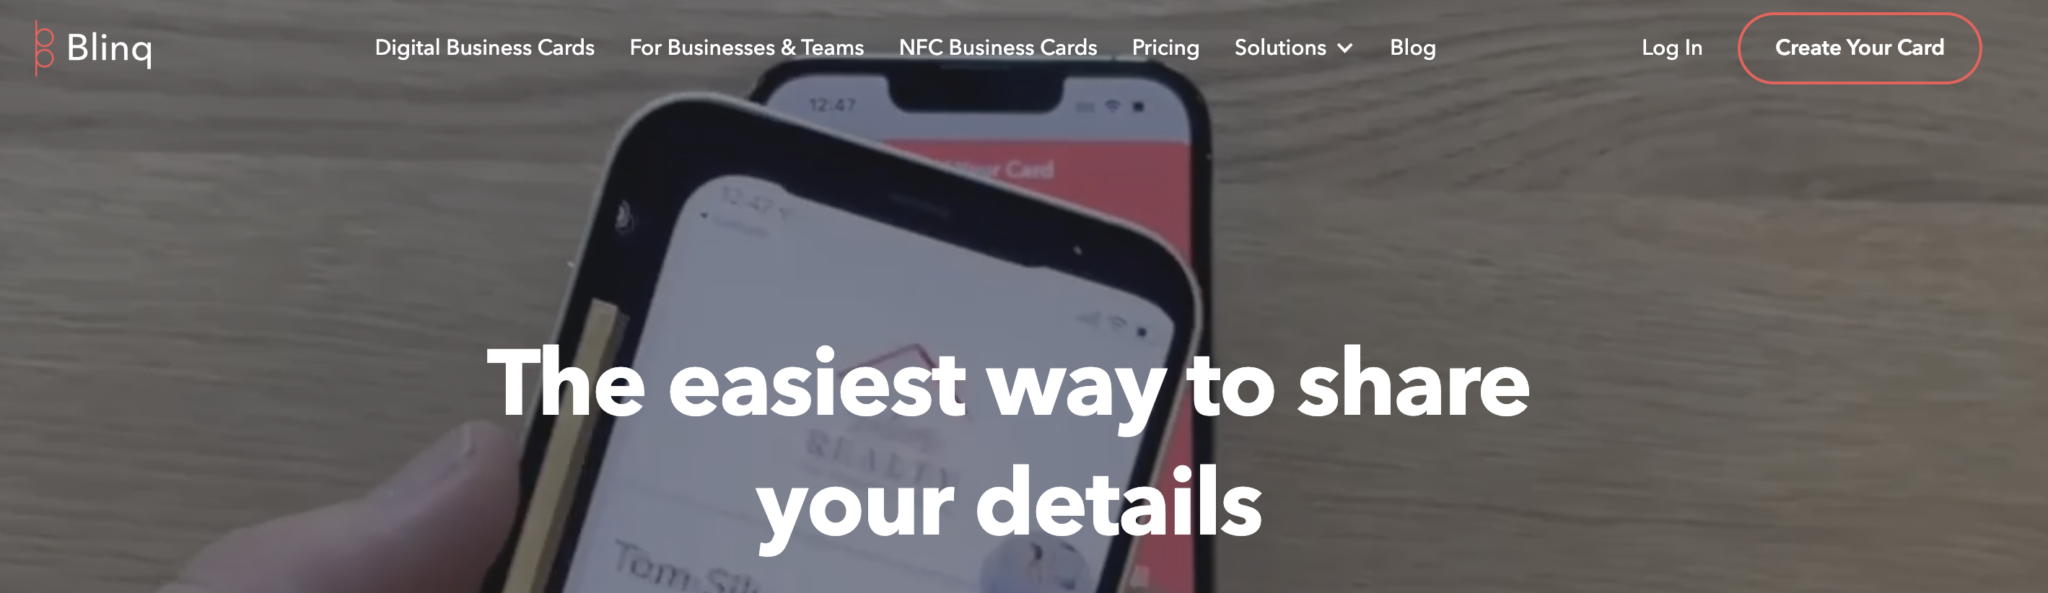 Digital Business Cards for entrepreneurs